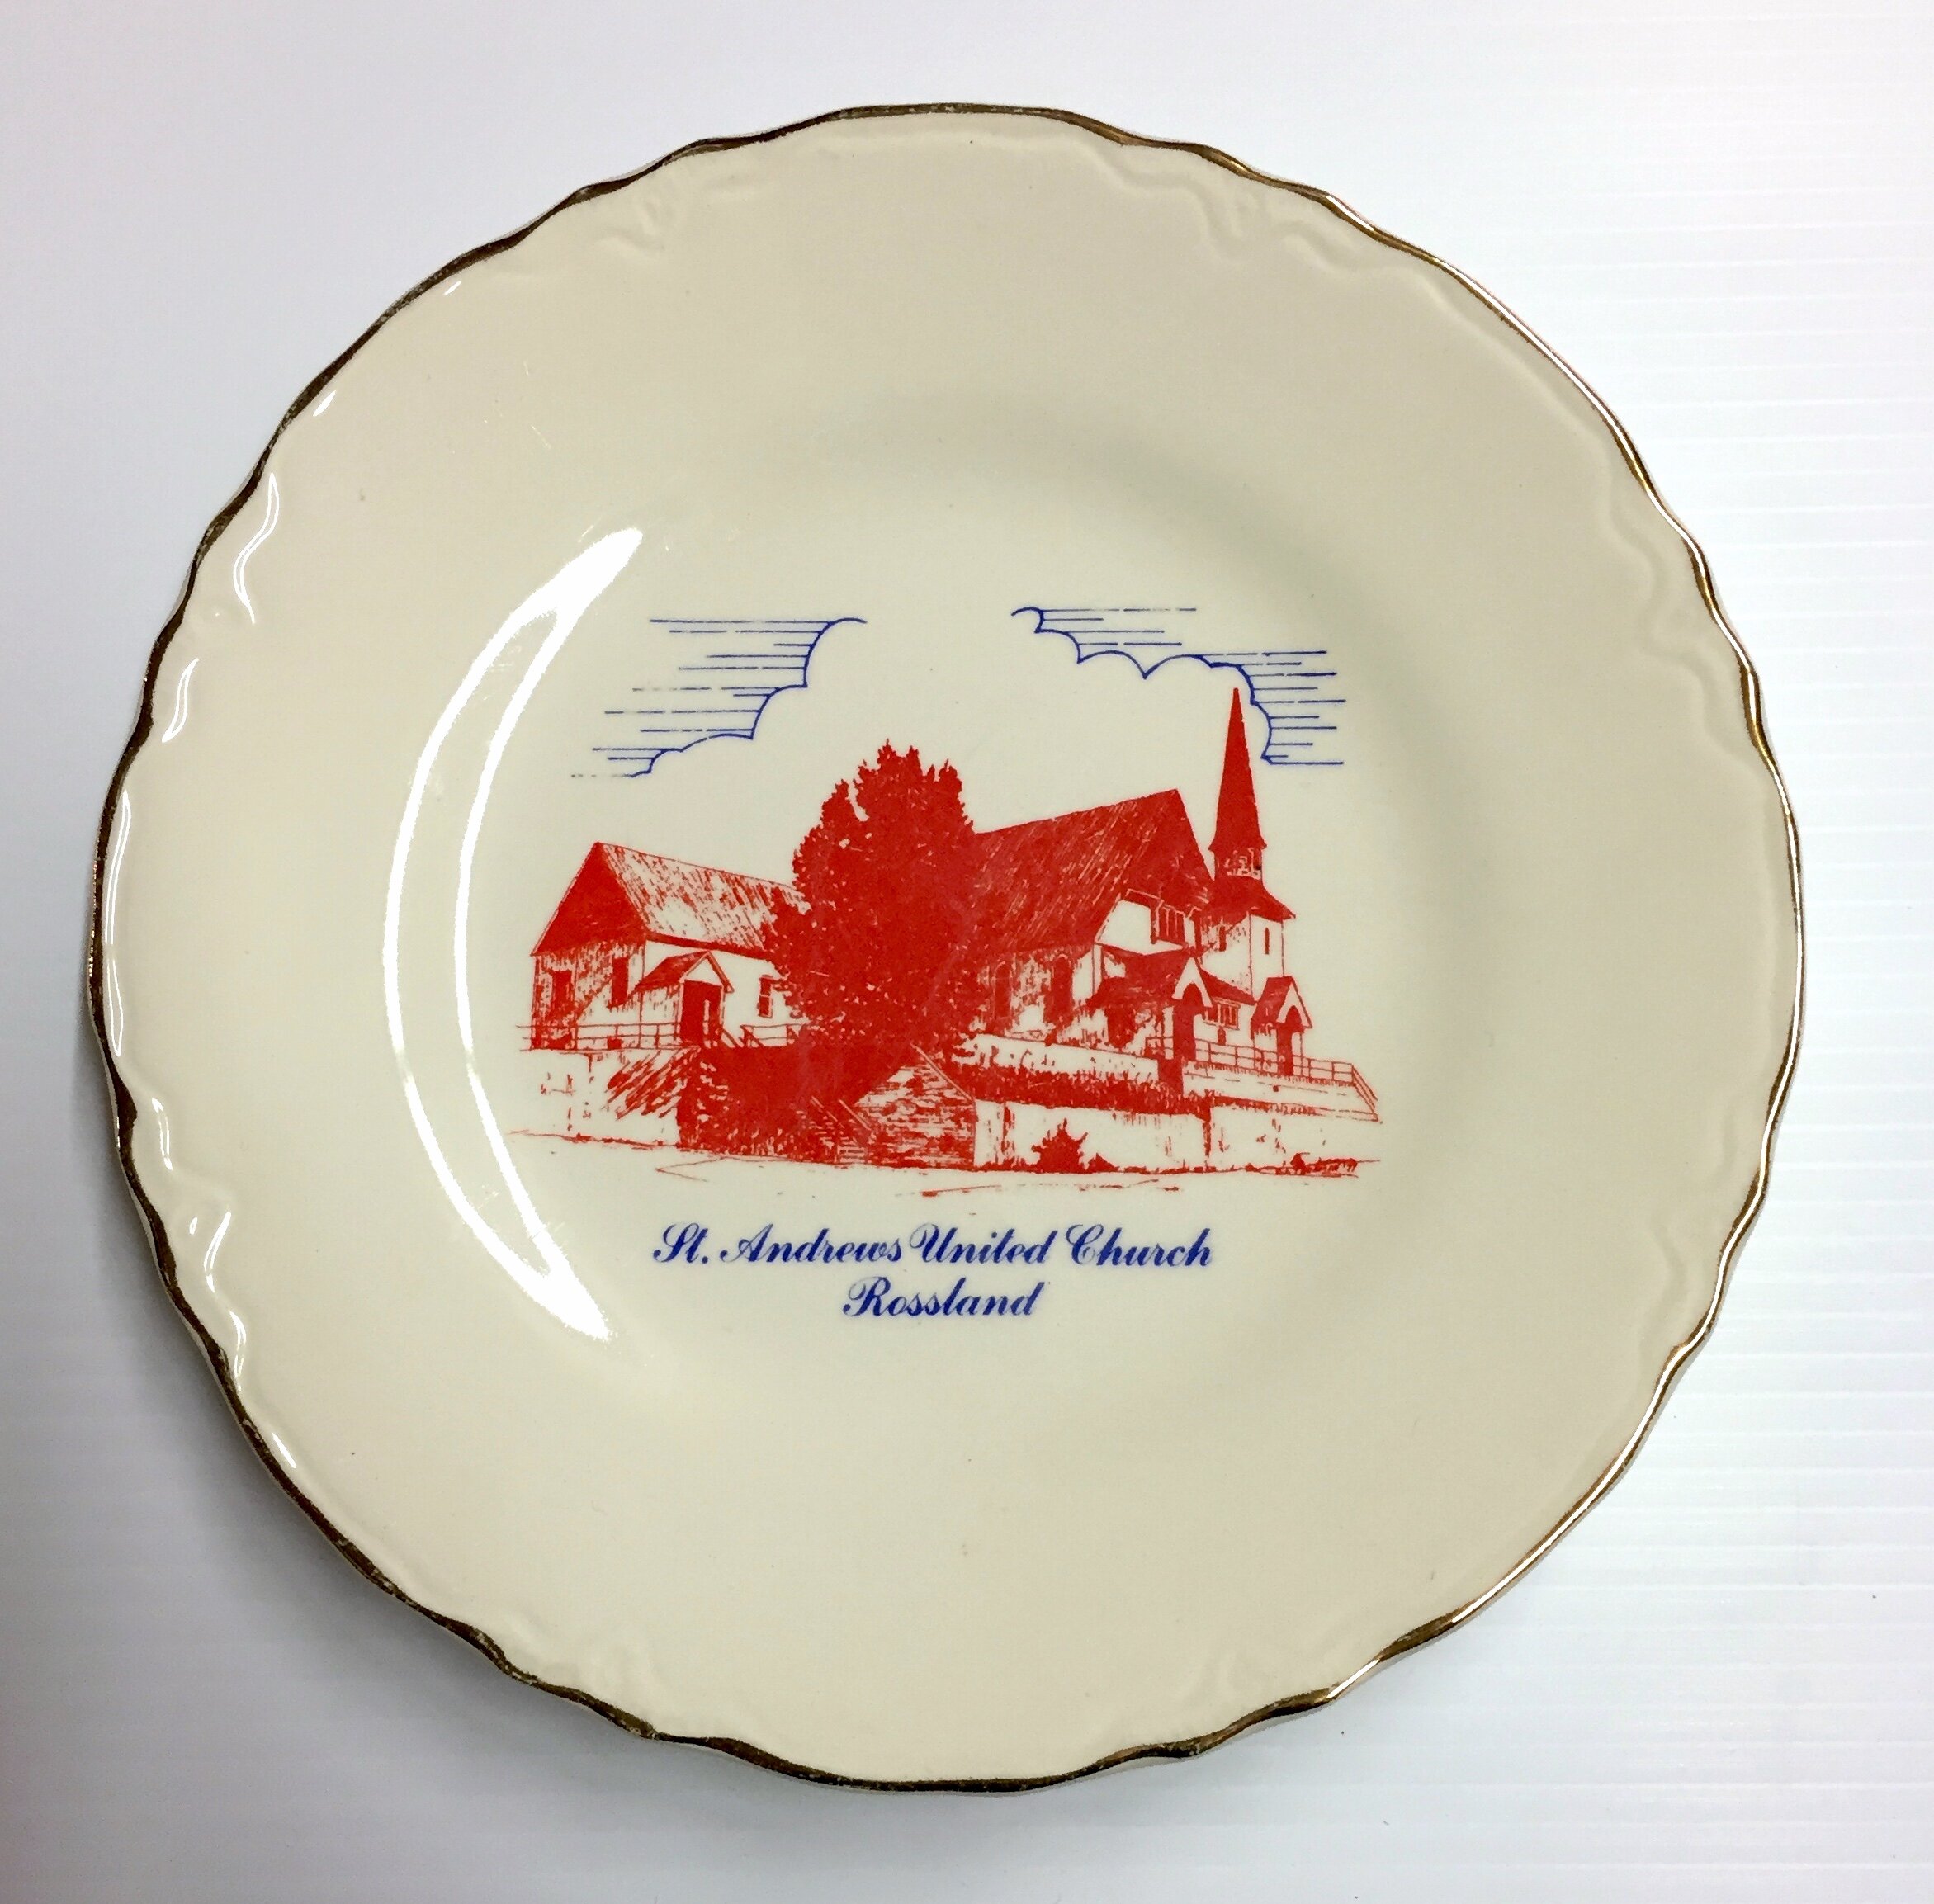 St. Andrews United Church Souvenir Plate